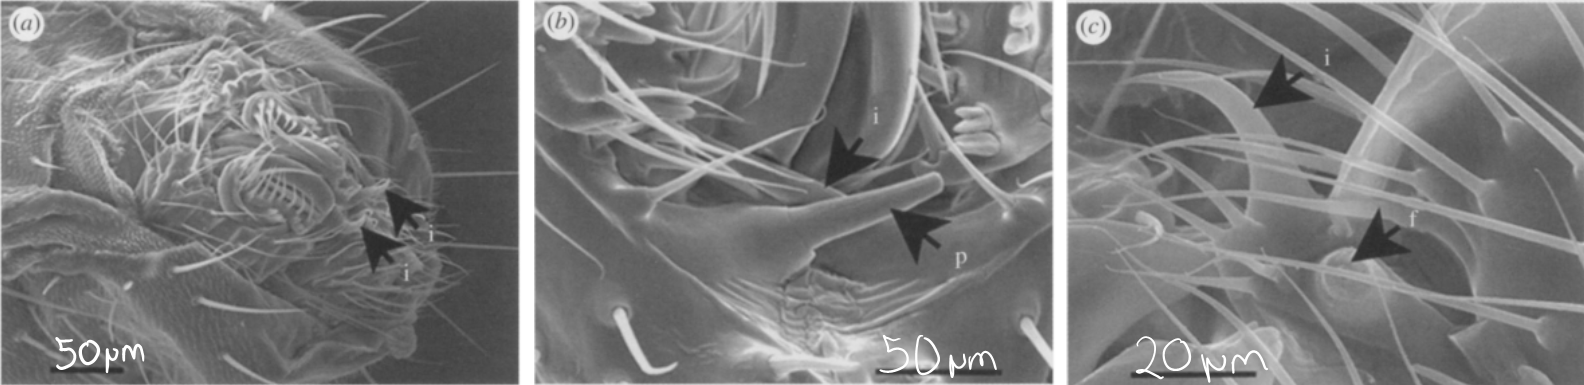 Penis von Drosophila bipectinata. Man kann deutlich die Widerhaken erkennen. (Polak M and Rashed A. 2010. Microscale laser surgery reveals adaptive function of male intromittent genitalia. Proc R Soc B. DOI: 10.1098/rspb.2009.1720)